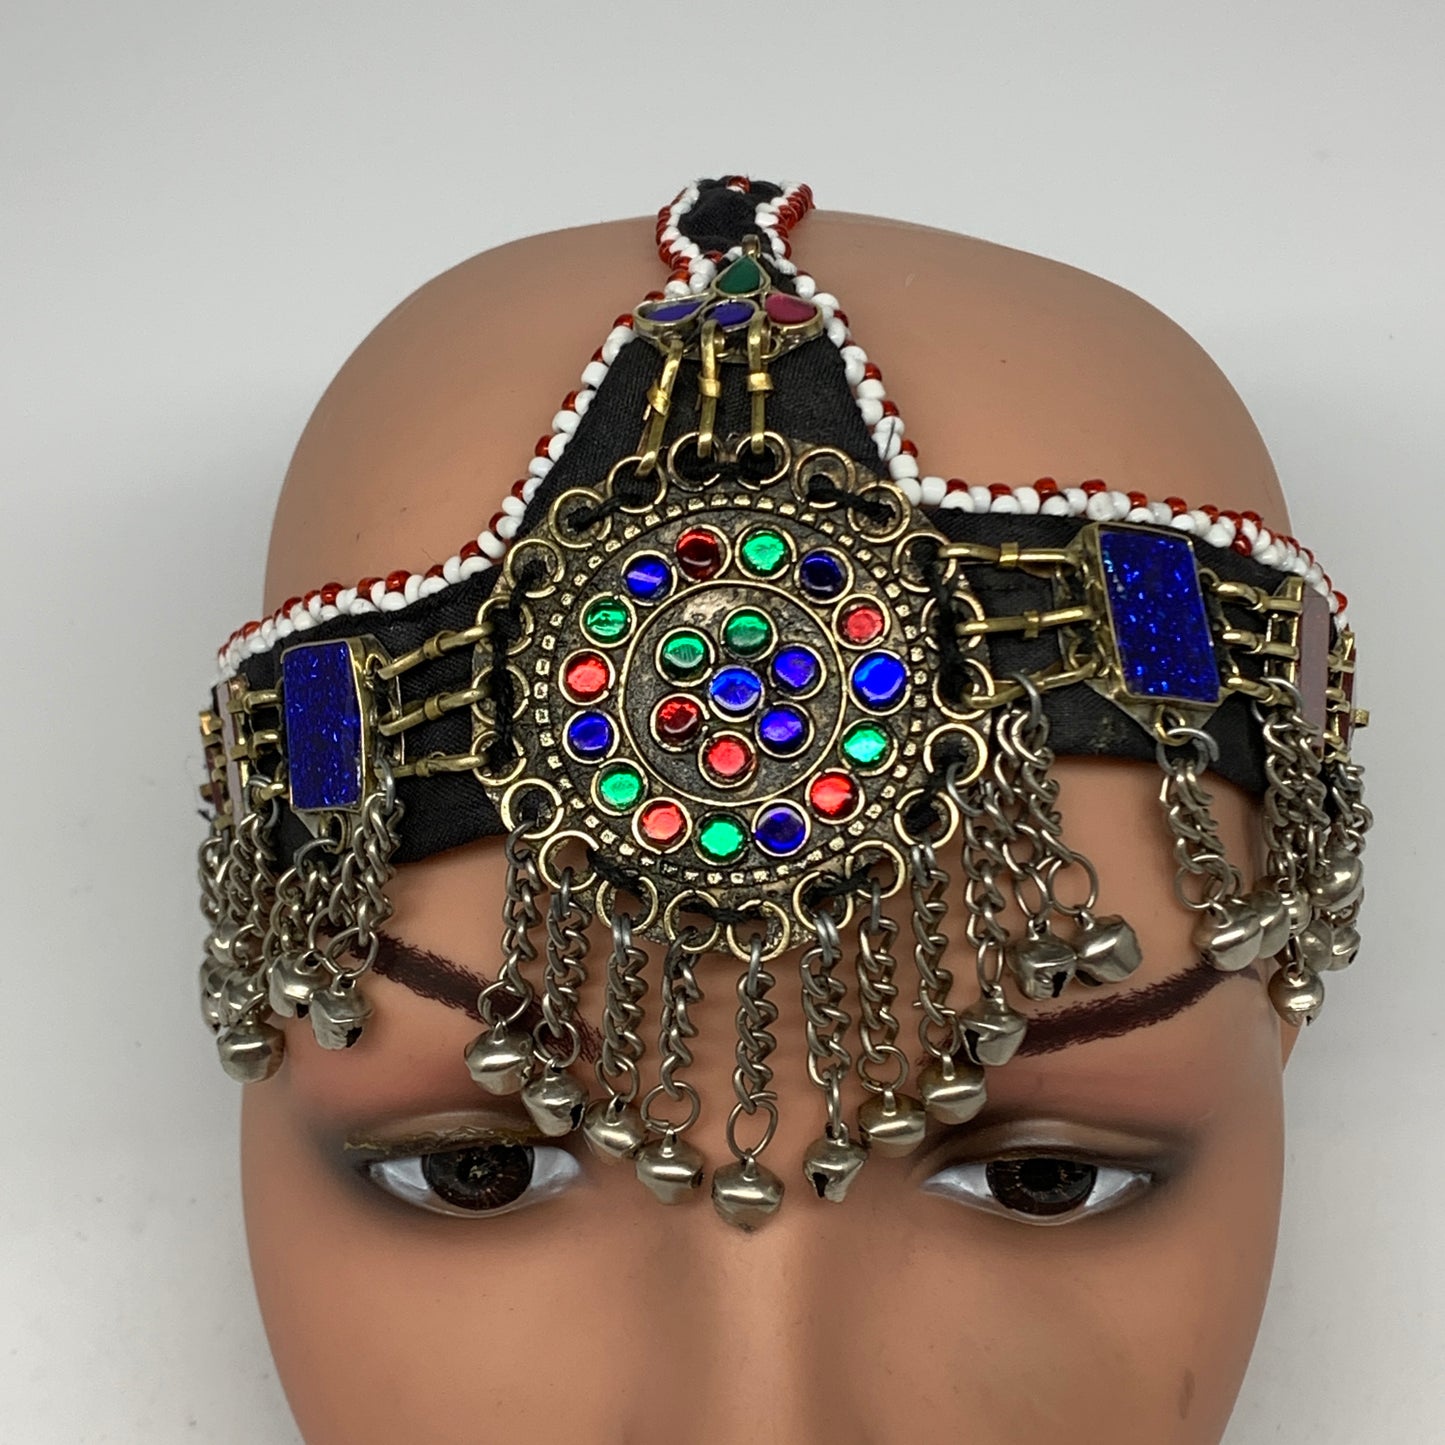 75.8g, Kuchi Headdress Headpiece Afghan Ethnic Tribal Jingle Bells @Afghanistan,